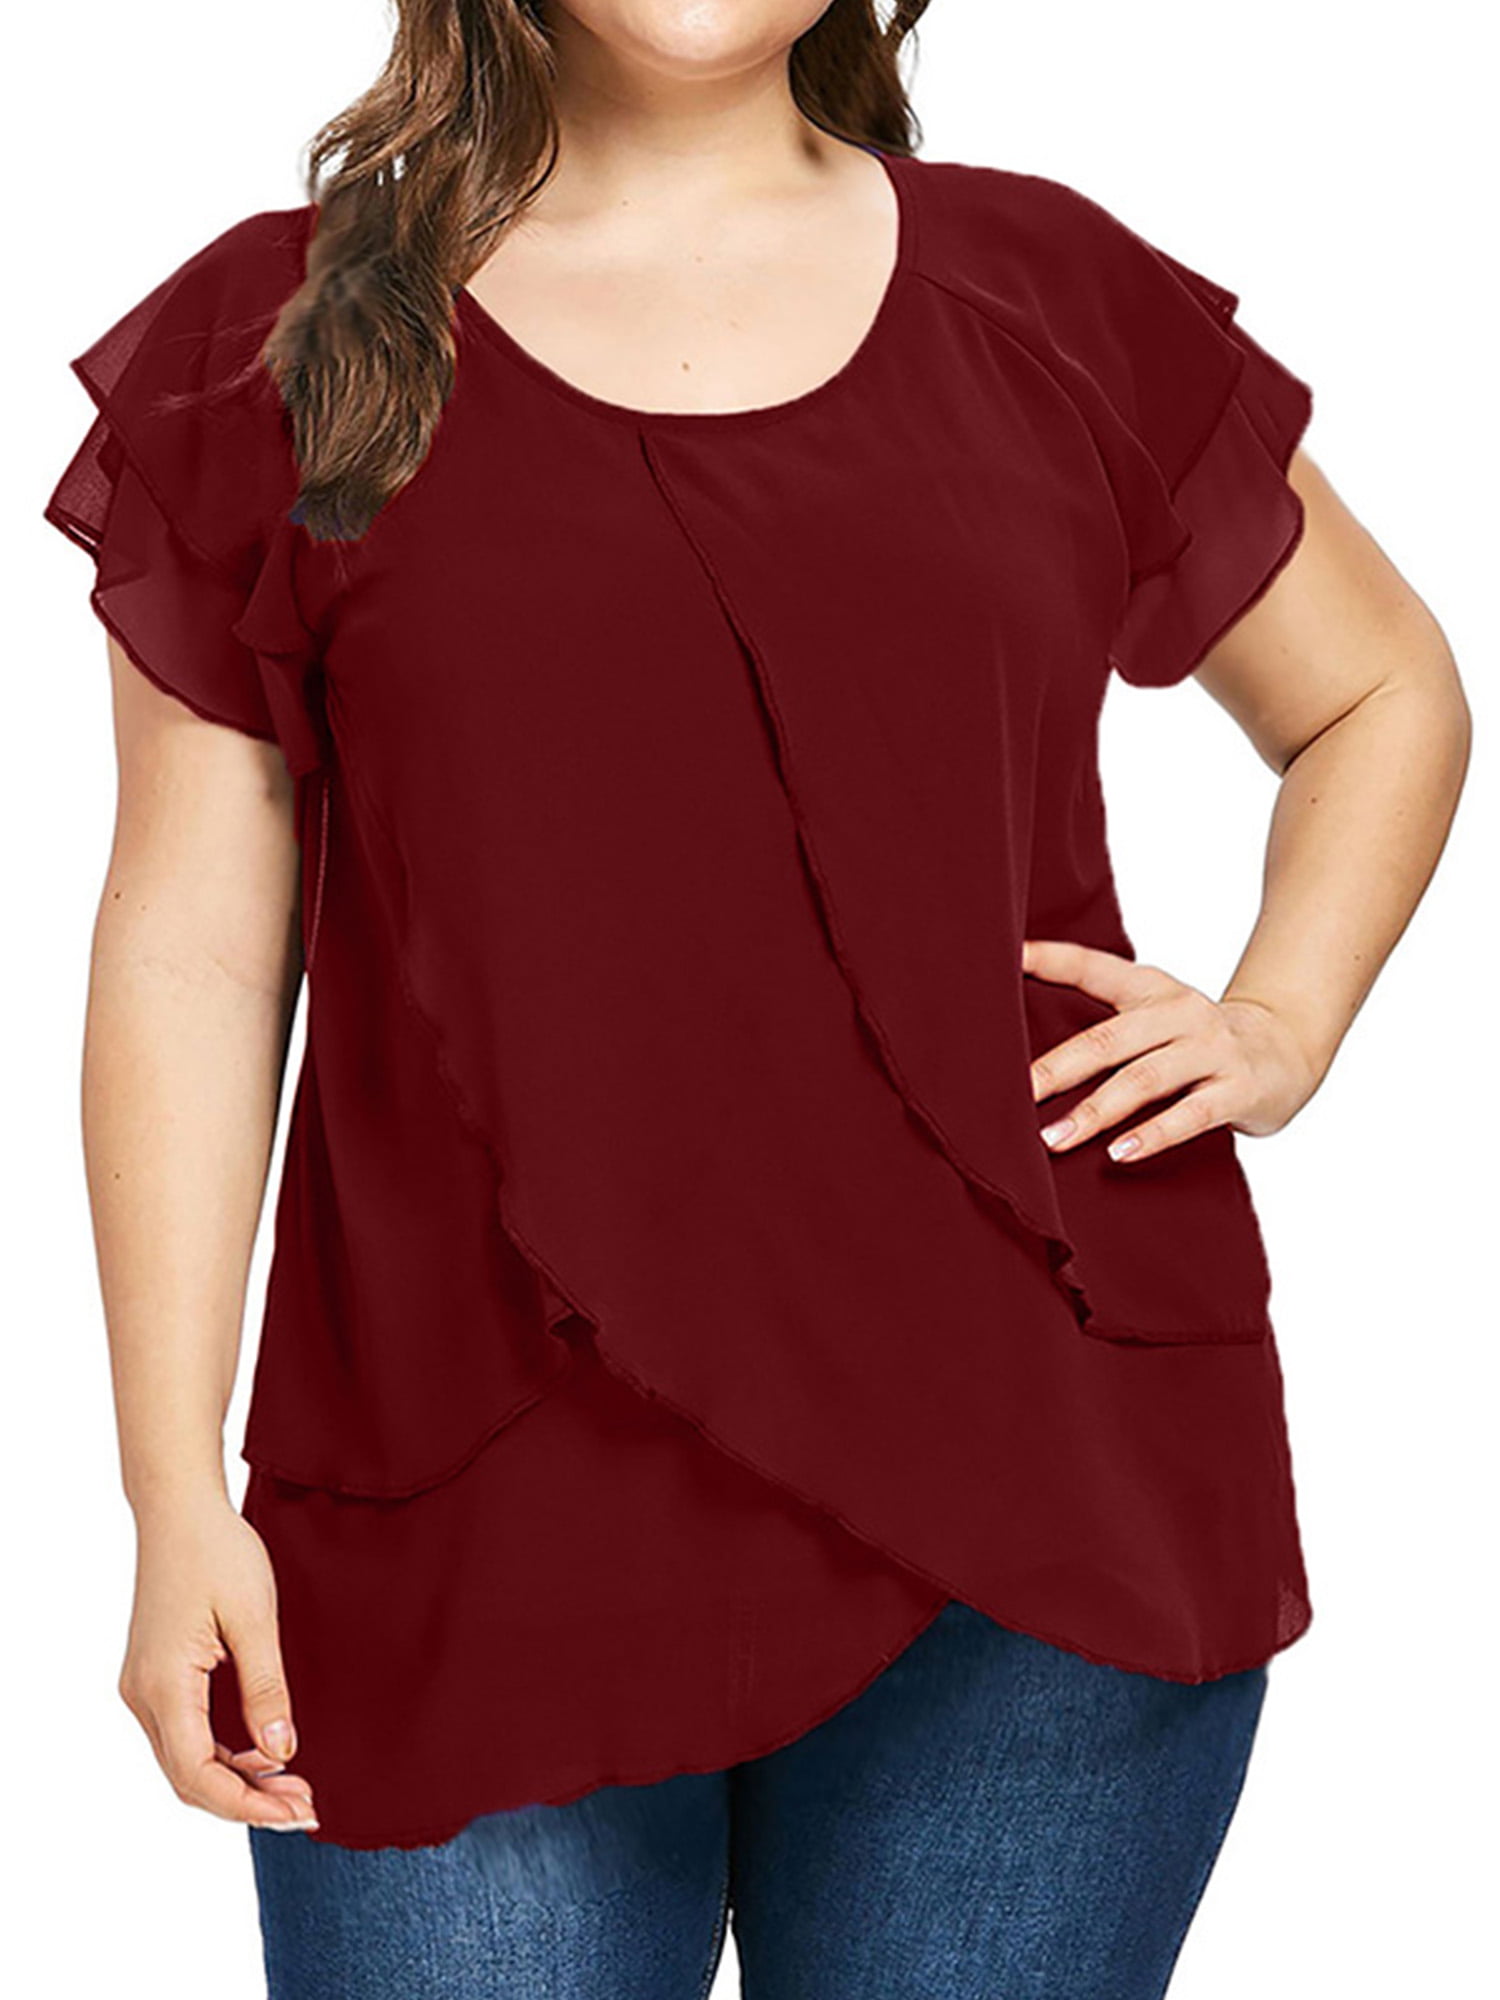 Sunmoot Clearance Sale Plus Size Henleys Shirt Womens Sleeveless Tank Tops Summer Casual Button Blouse T-Shirt Tunic 